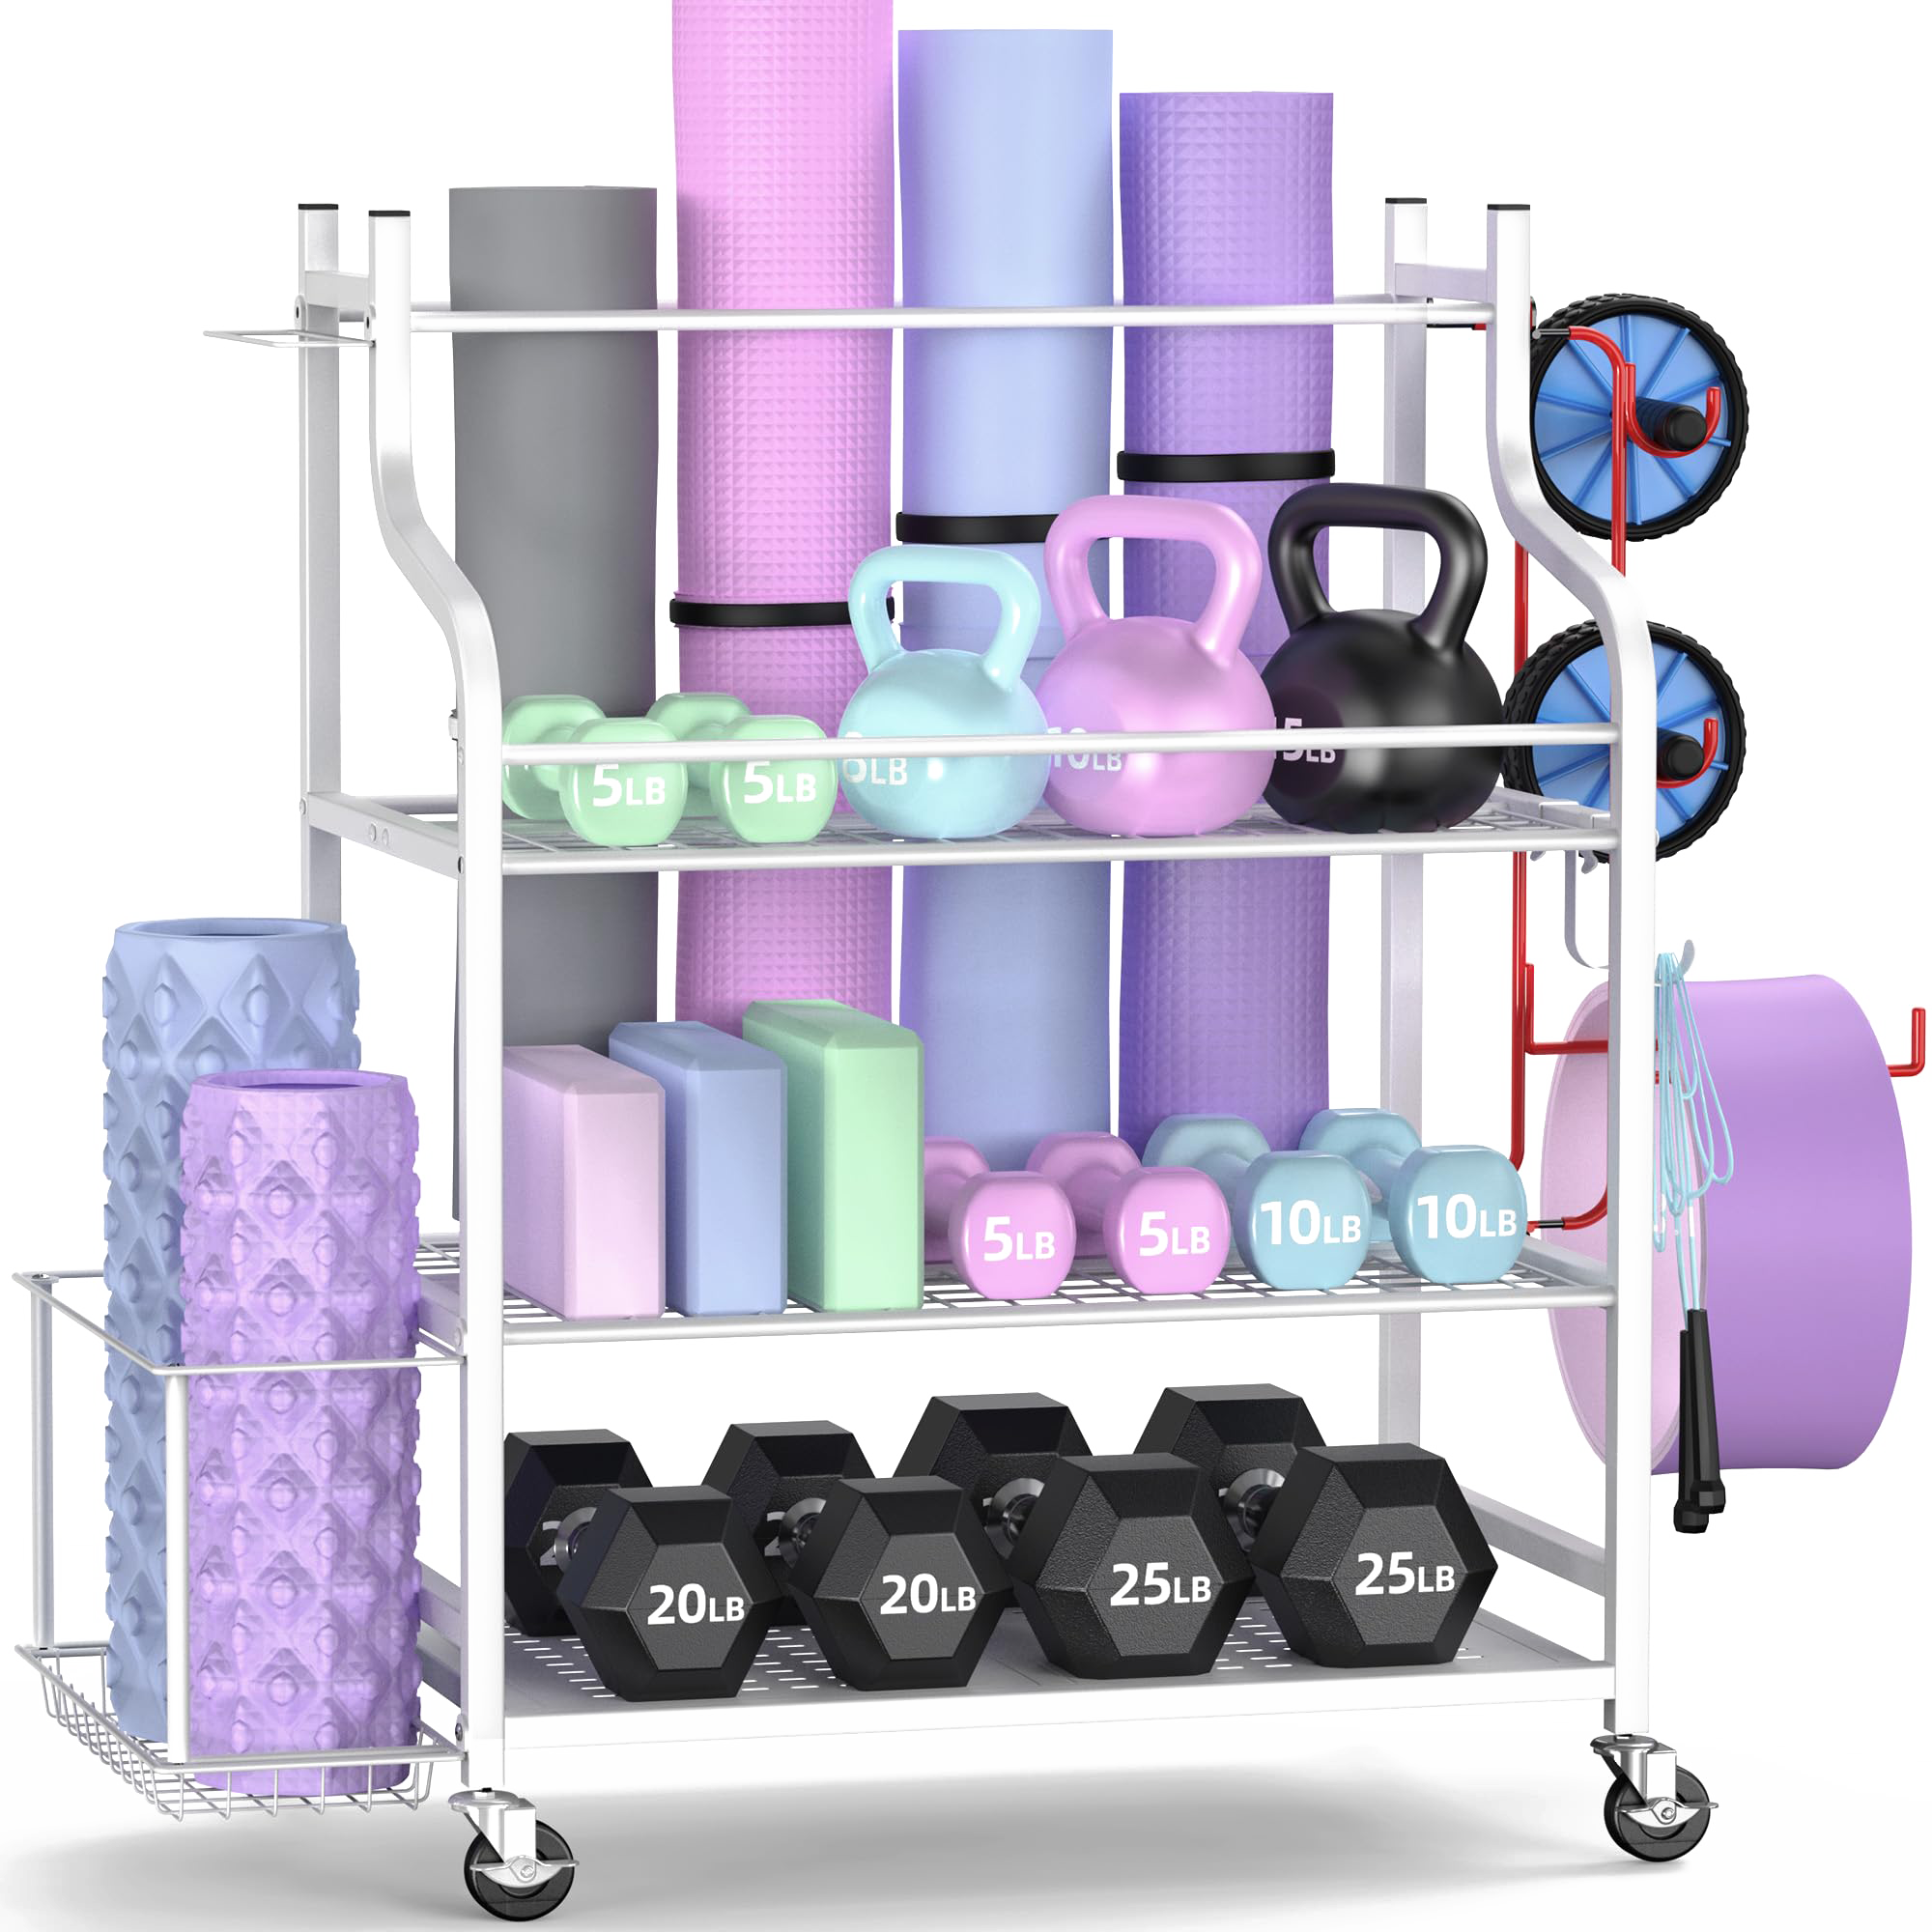 Synergee Yoga Mat Storage Rack